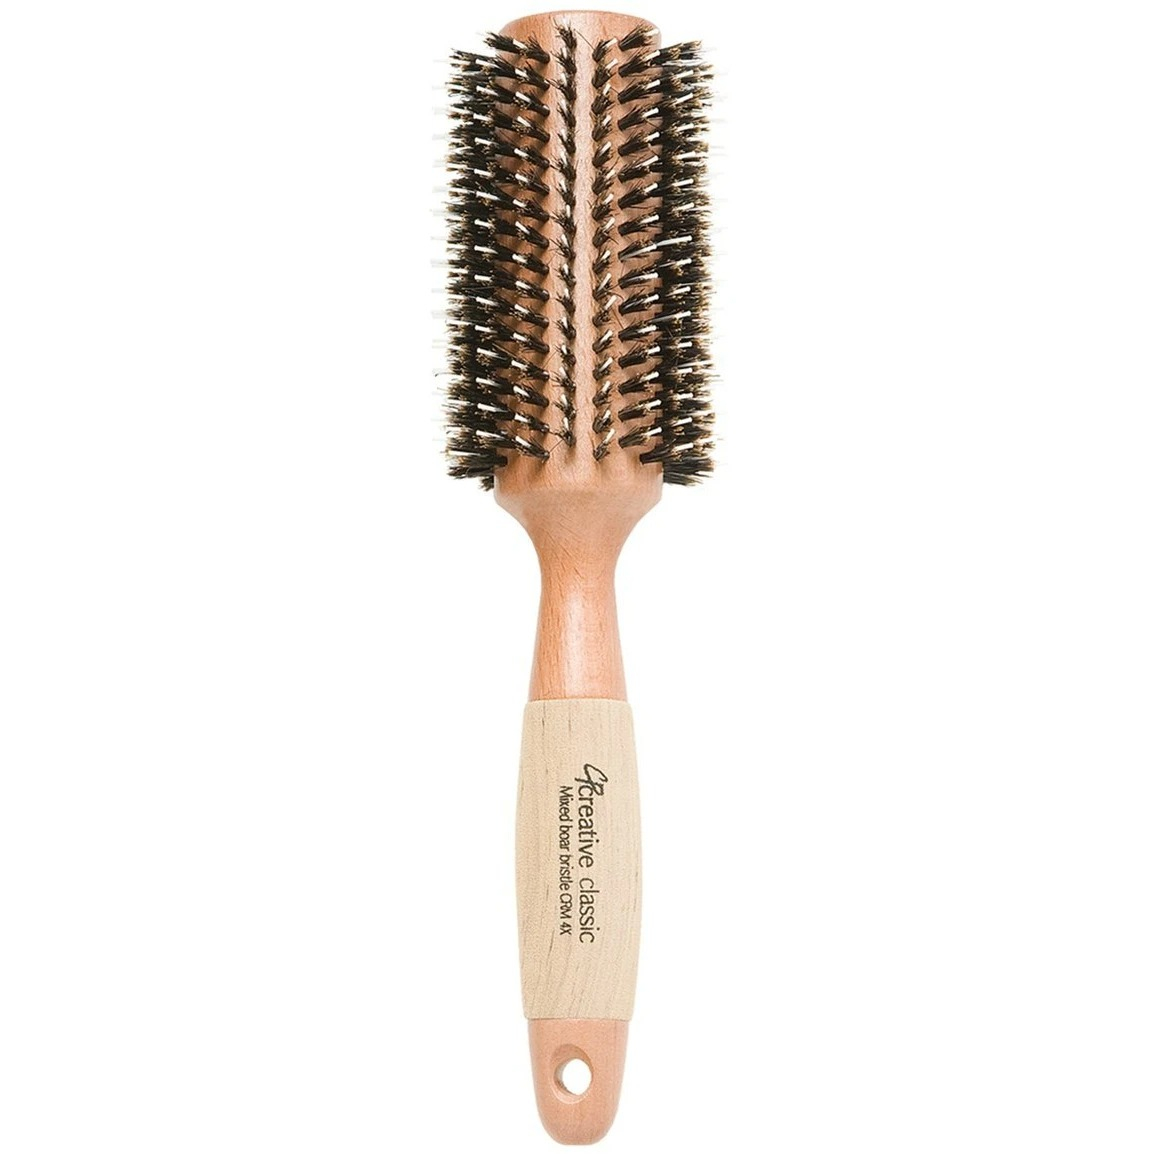 Mixed Bristle 2.5 Inch Round Hair Brush - Birchwood & Cork Handle # CRM4X